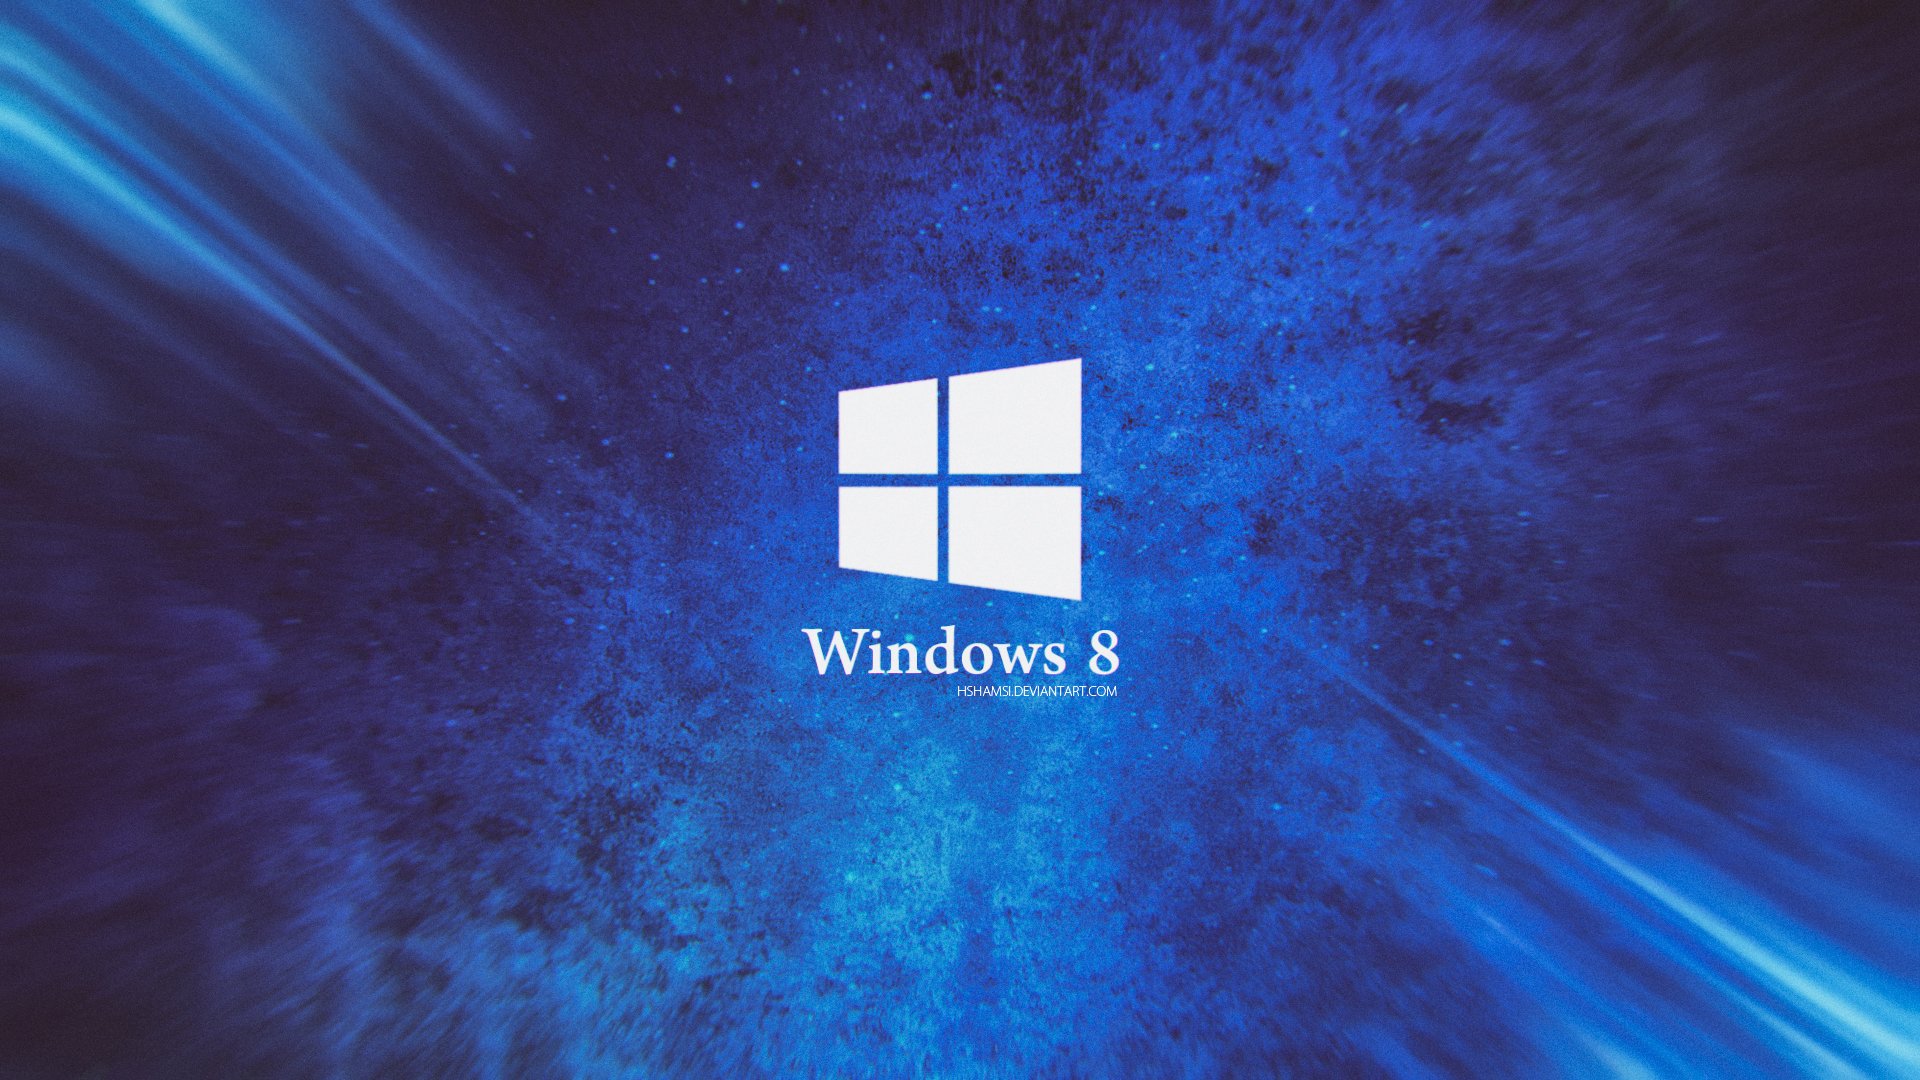 Windows upd. Виндовс 8. Заставка виндовс 8. Windows 8 рабочий стол. Картинки Windows 8.